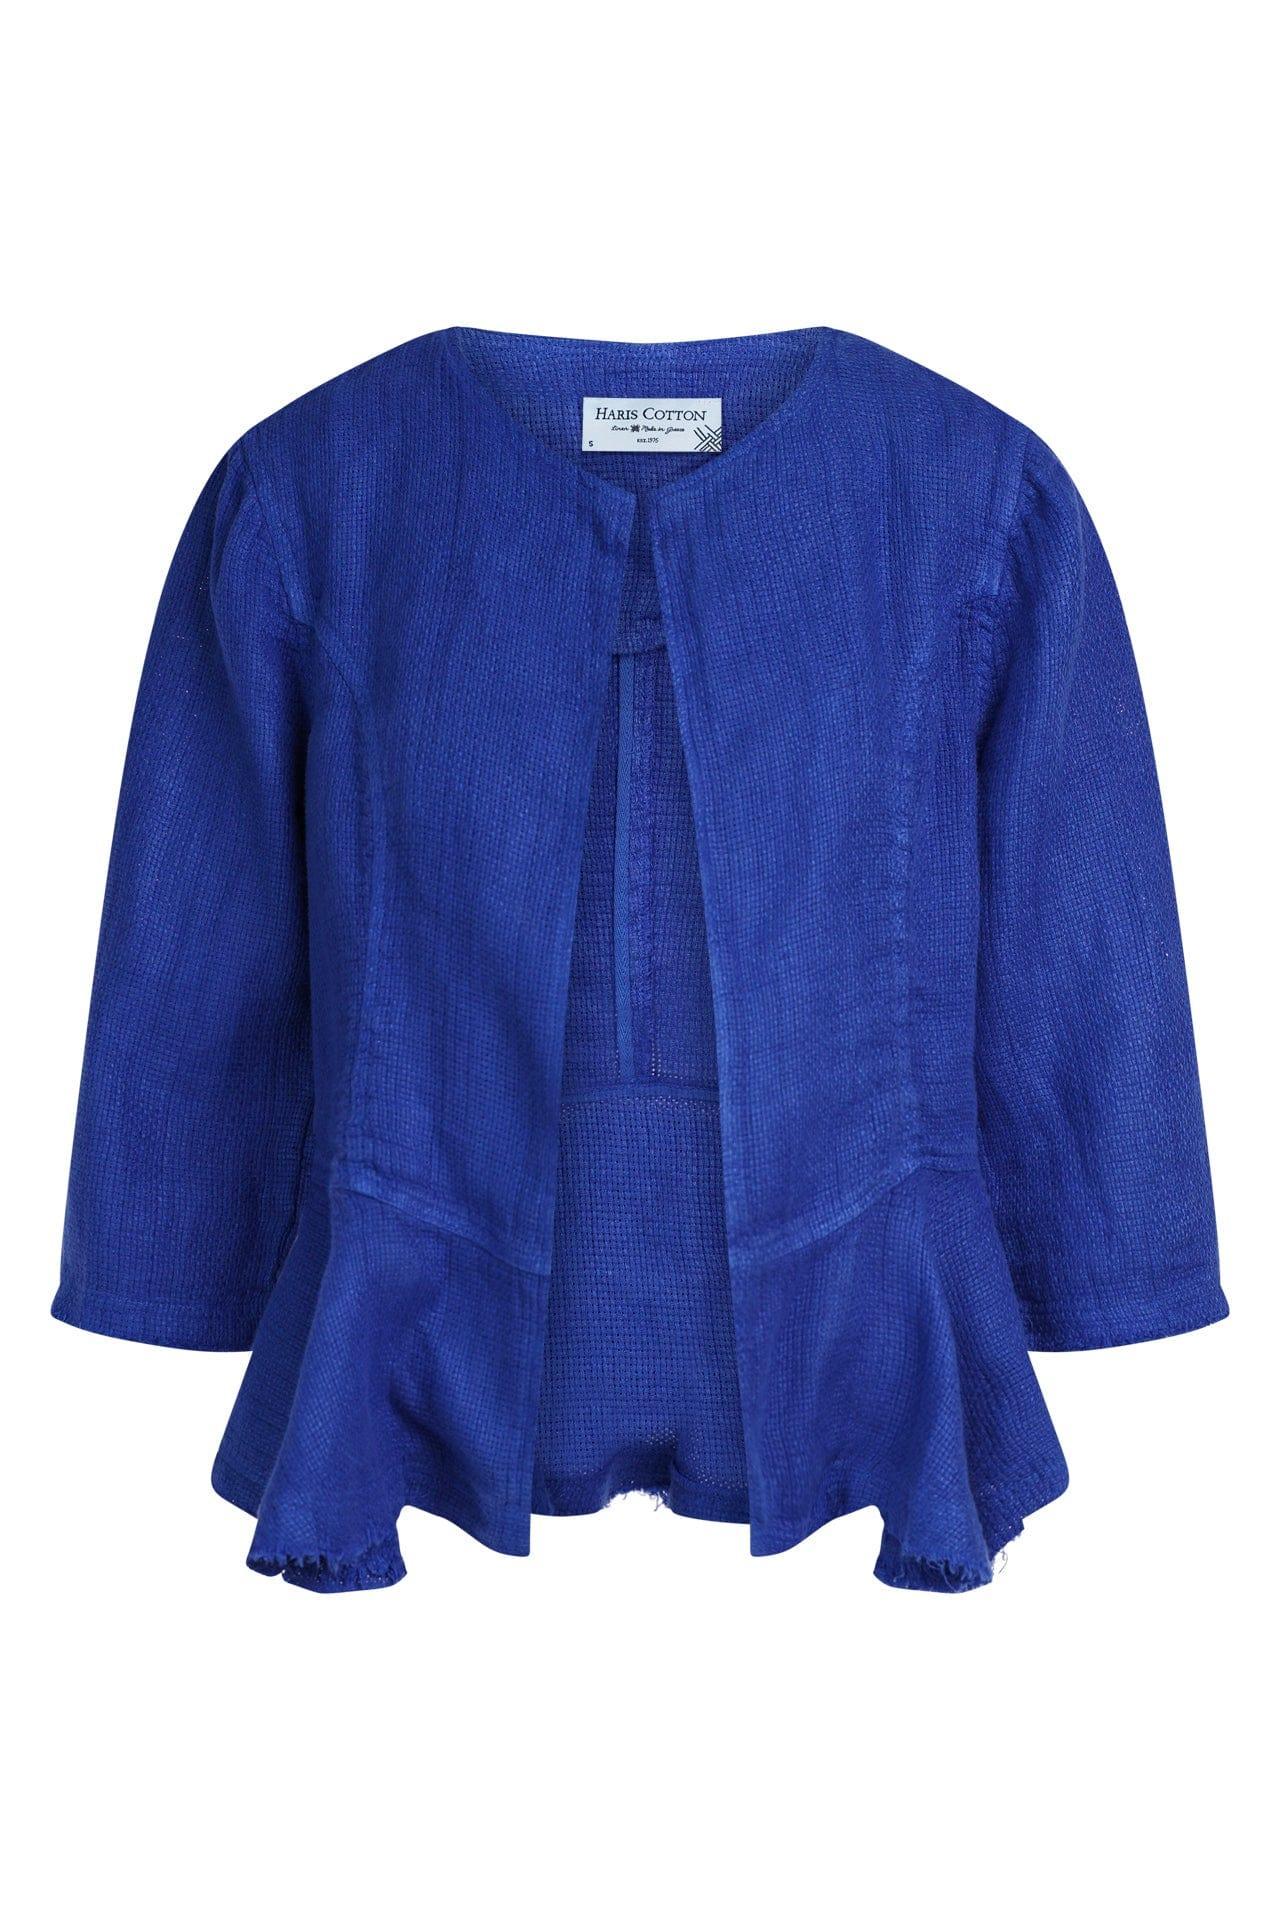 Haris Cotton Jackets Open Weave Jacket in Lapis Blue